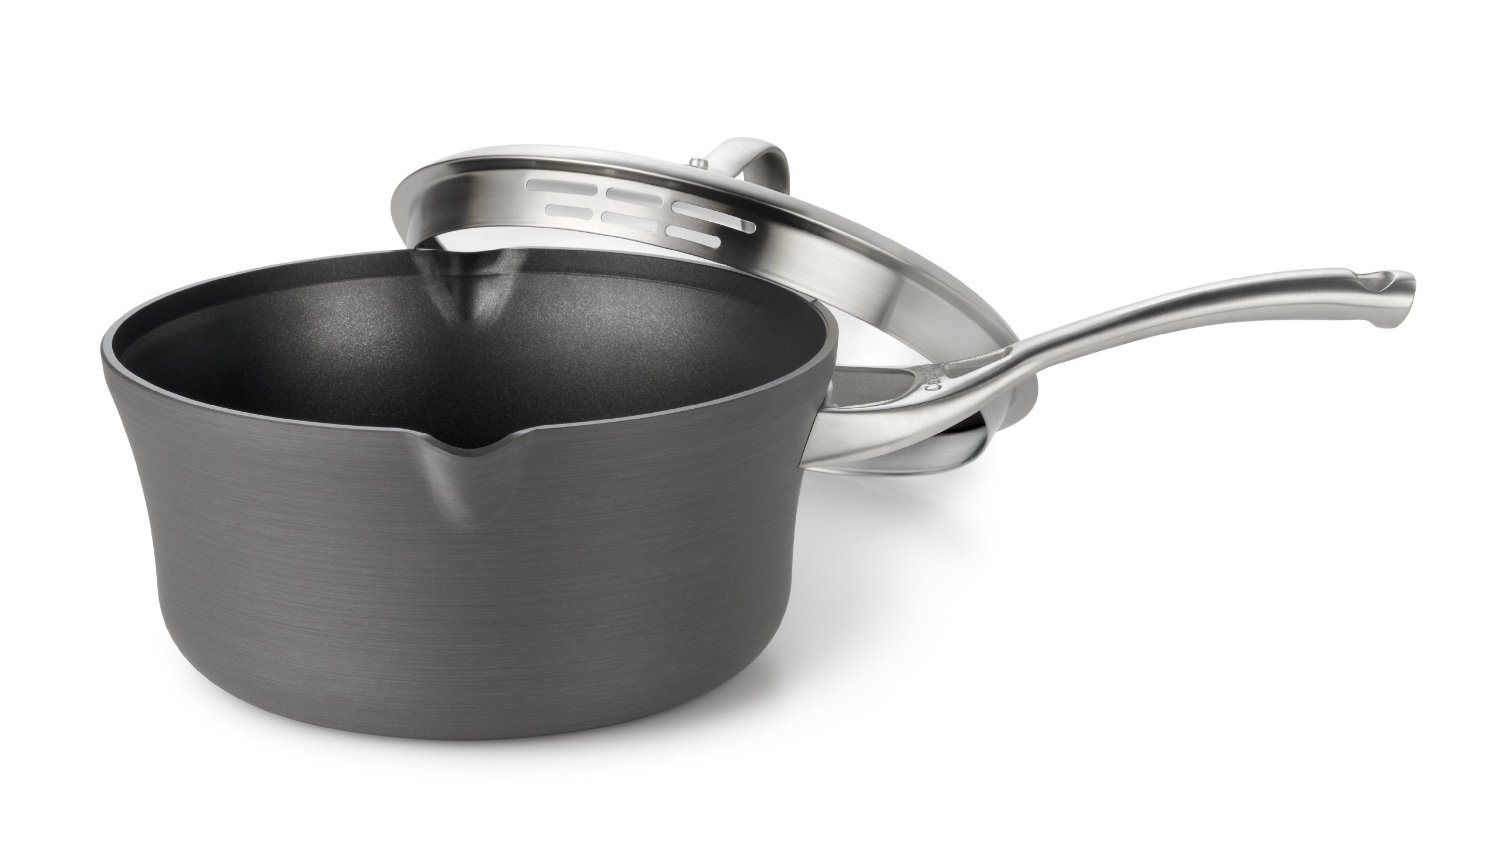 Buy this 3 quart sauce pan from Calphalon on Amazon